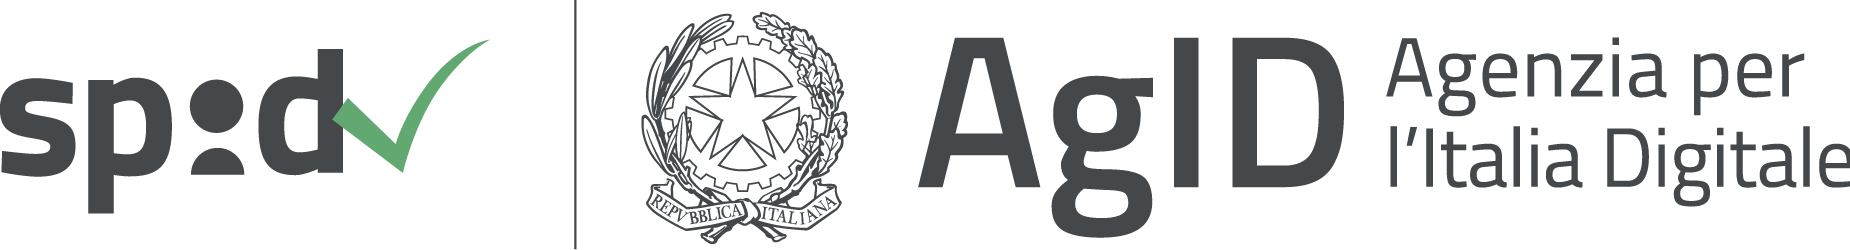 SPID and AGID logo